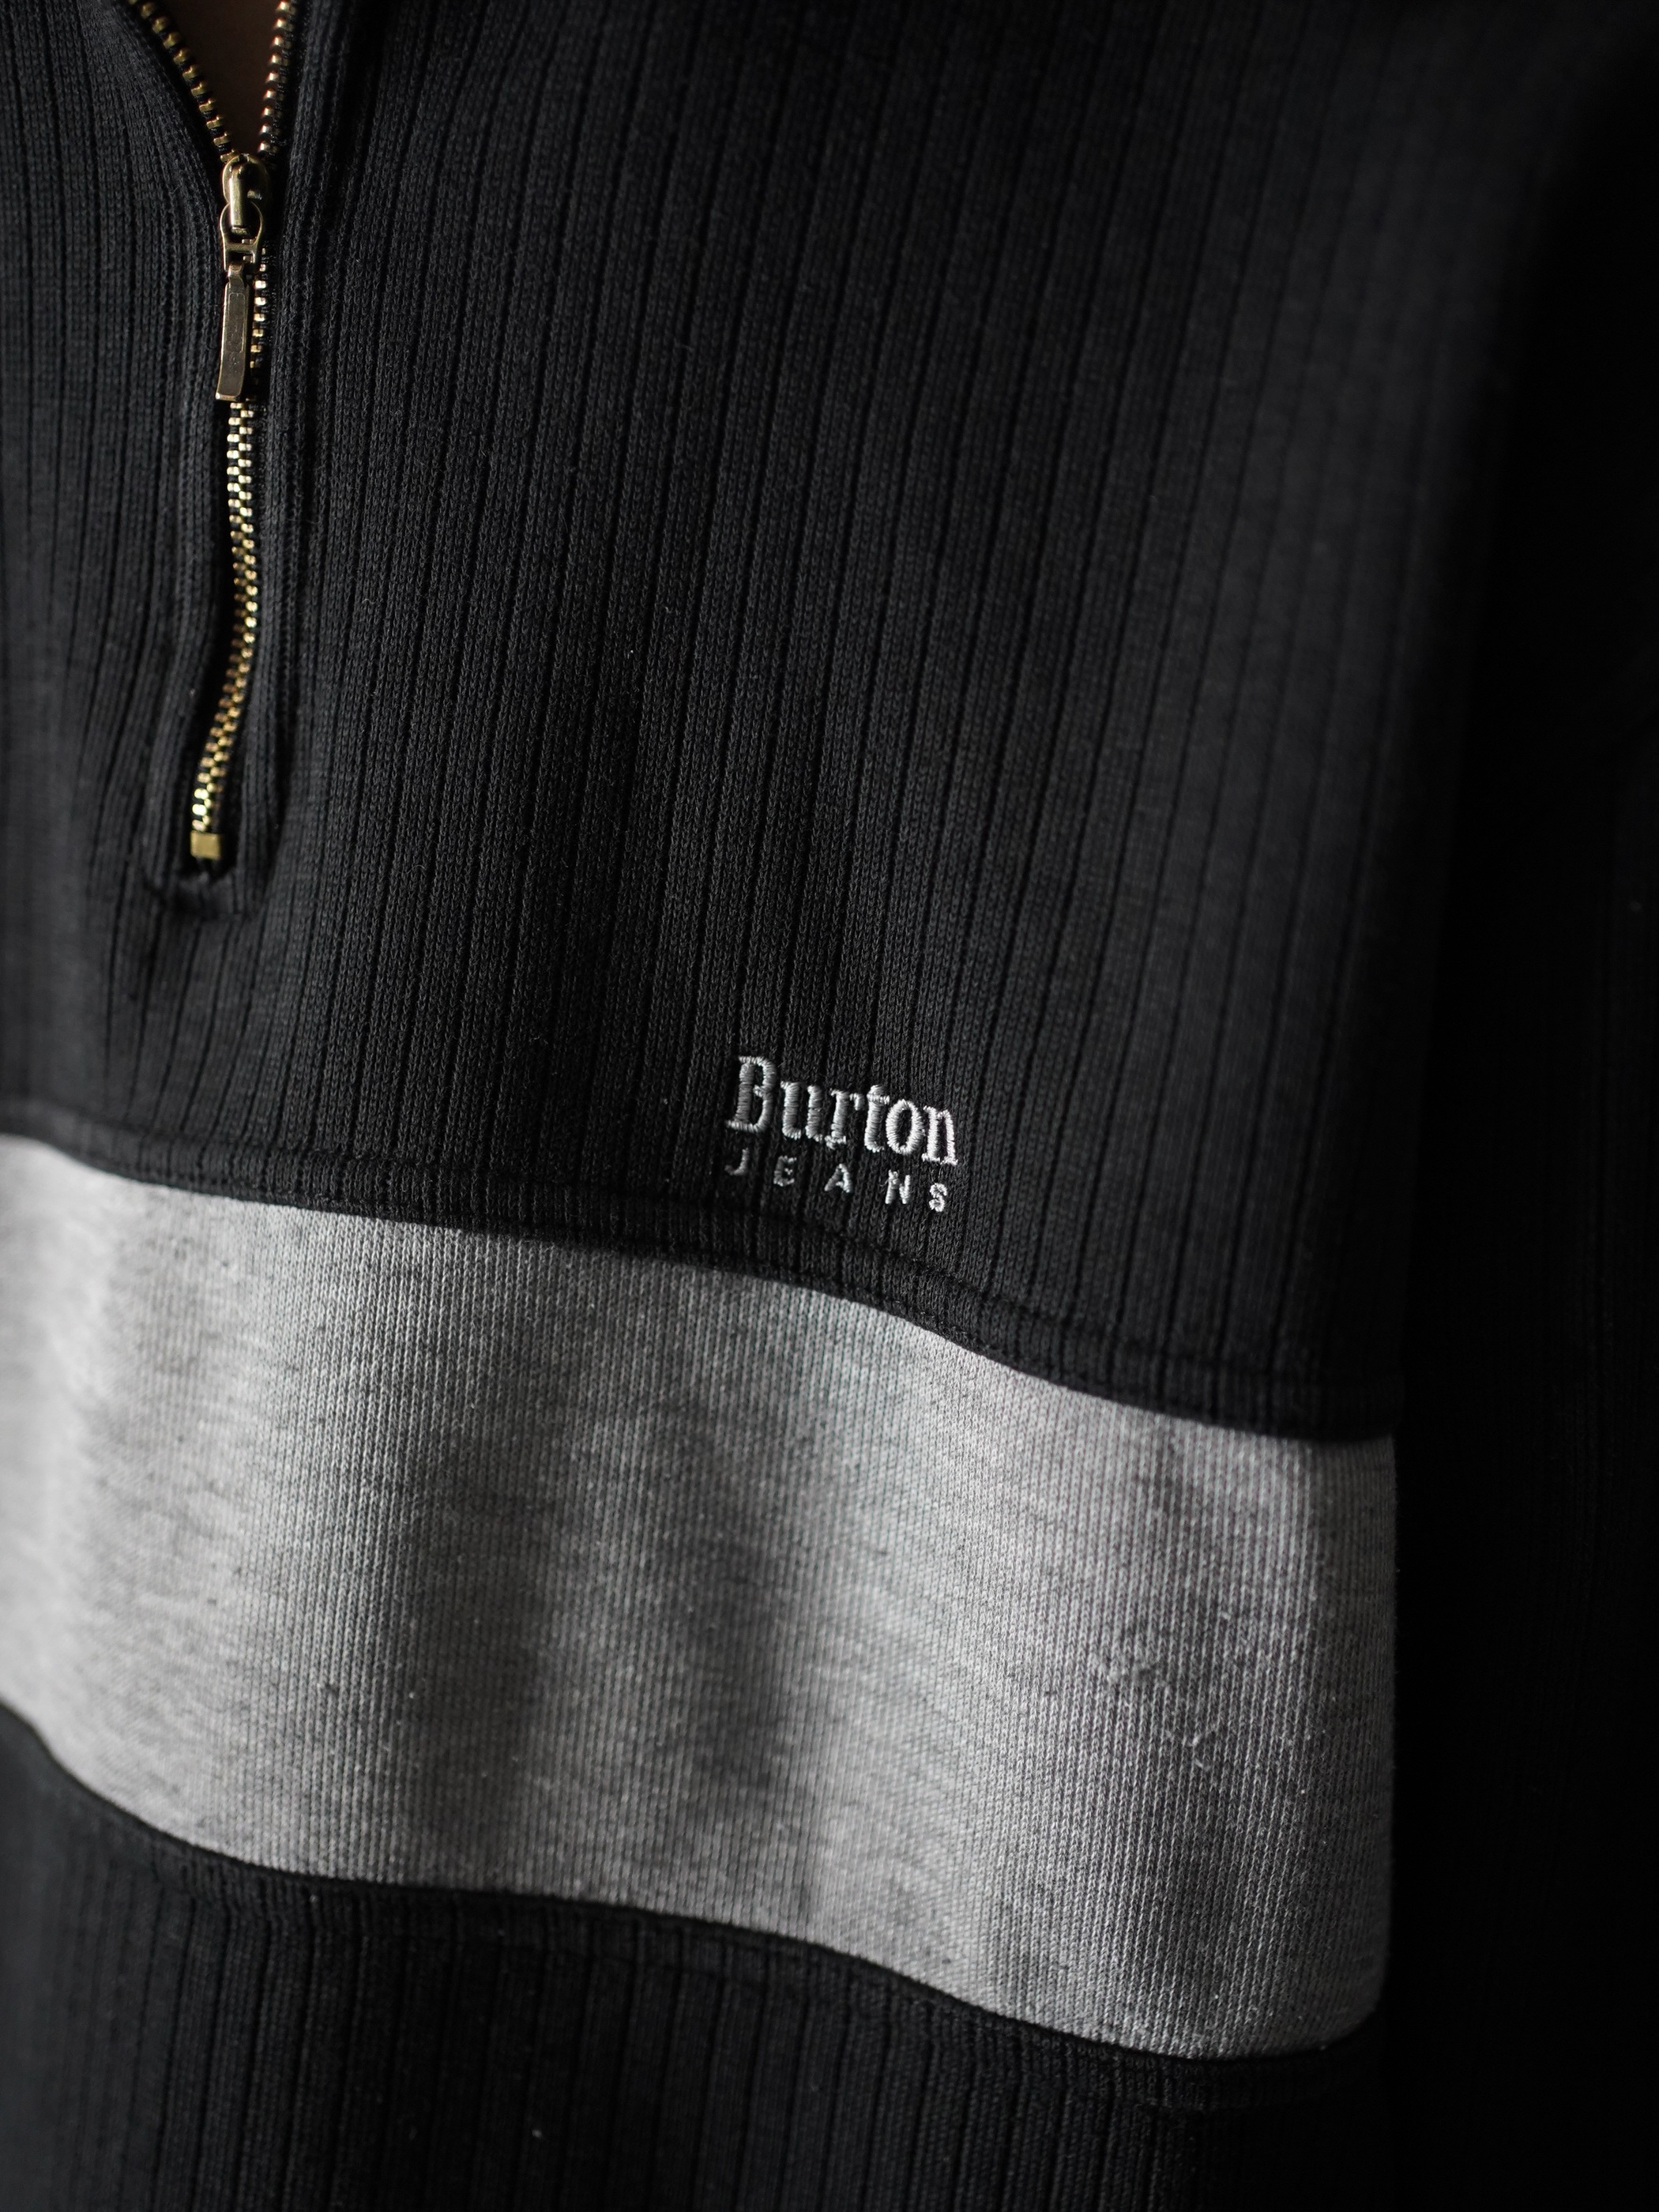 Burton jeans Half zip polo shirt